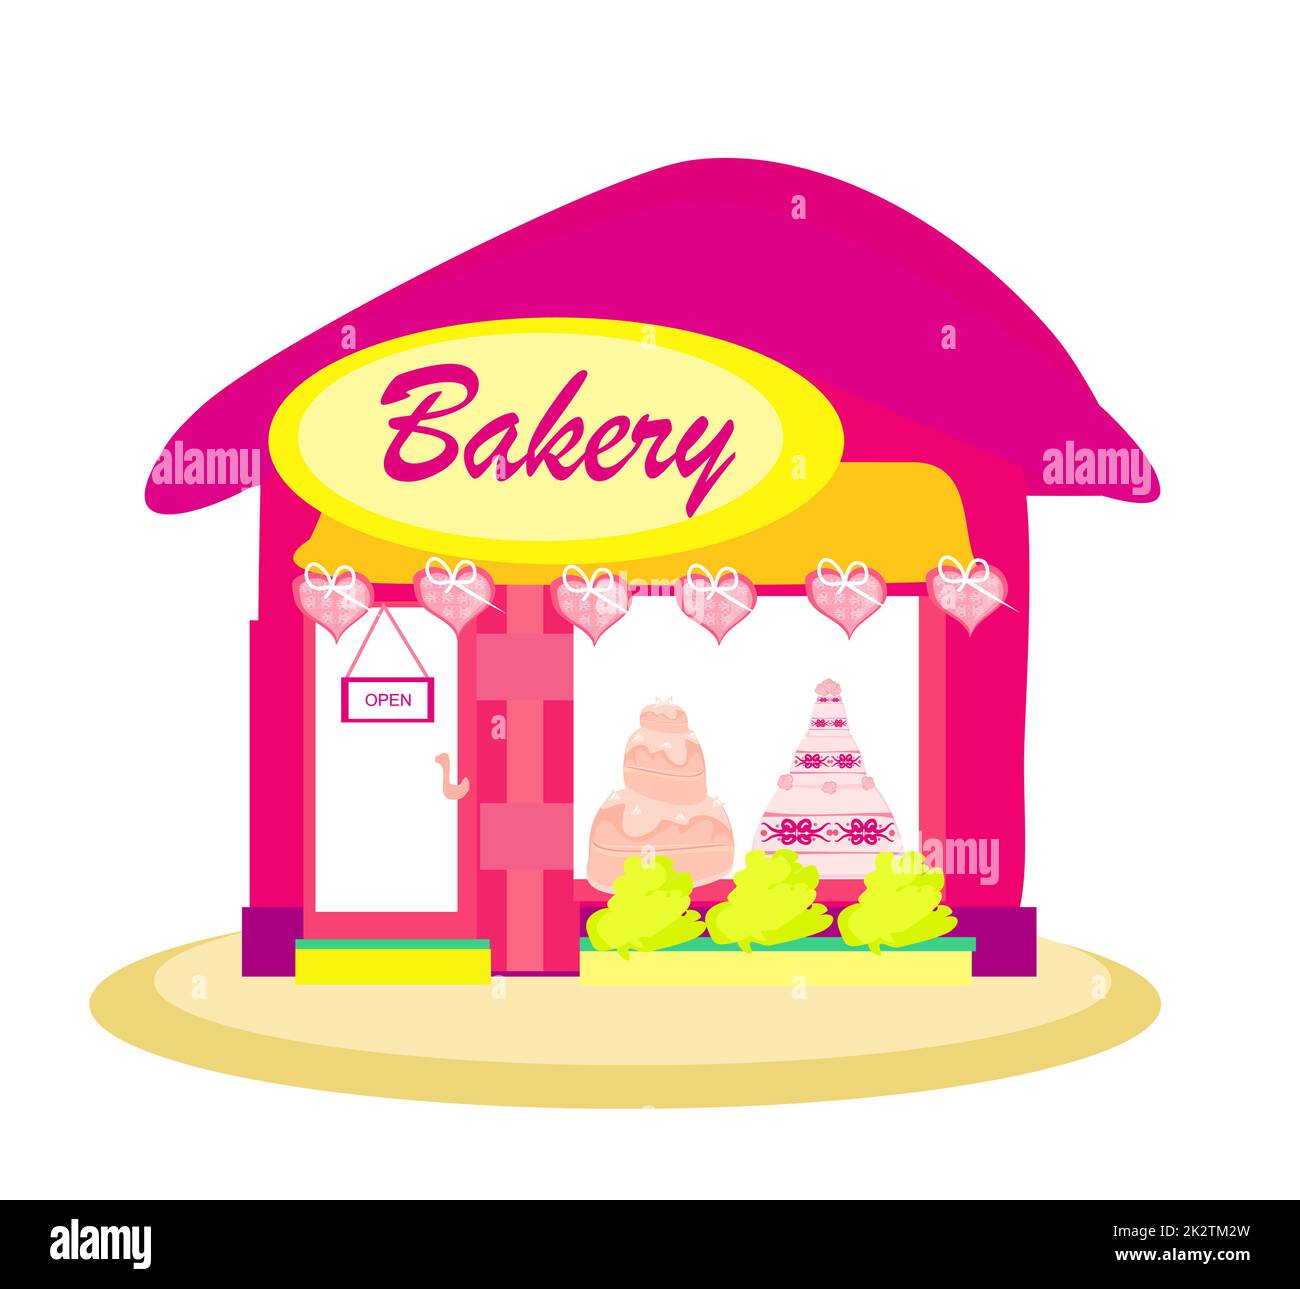 illustration of bakery shop Stock Photo